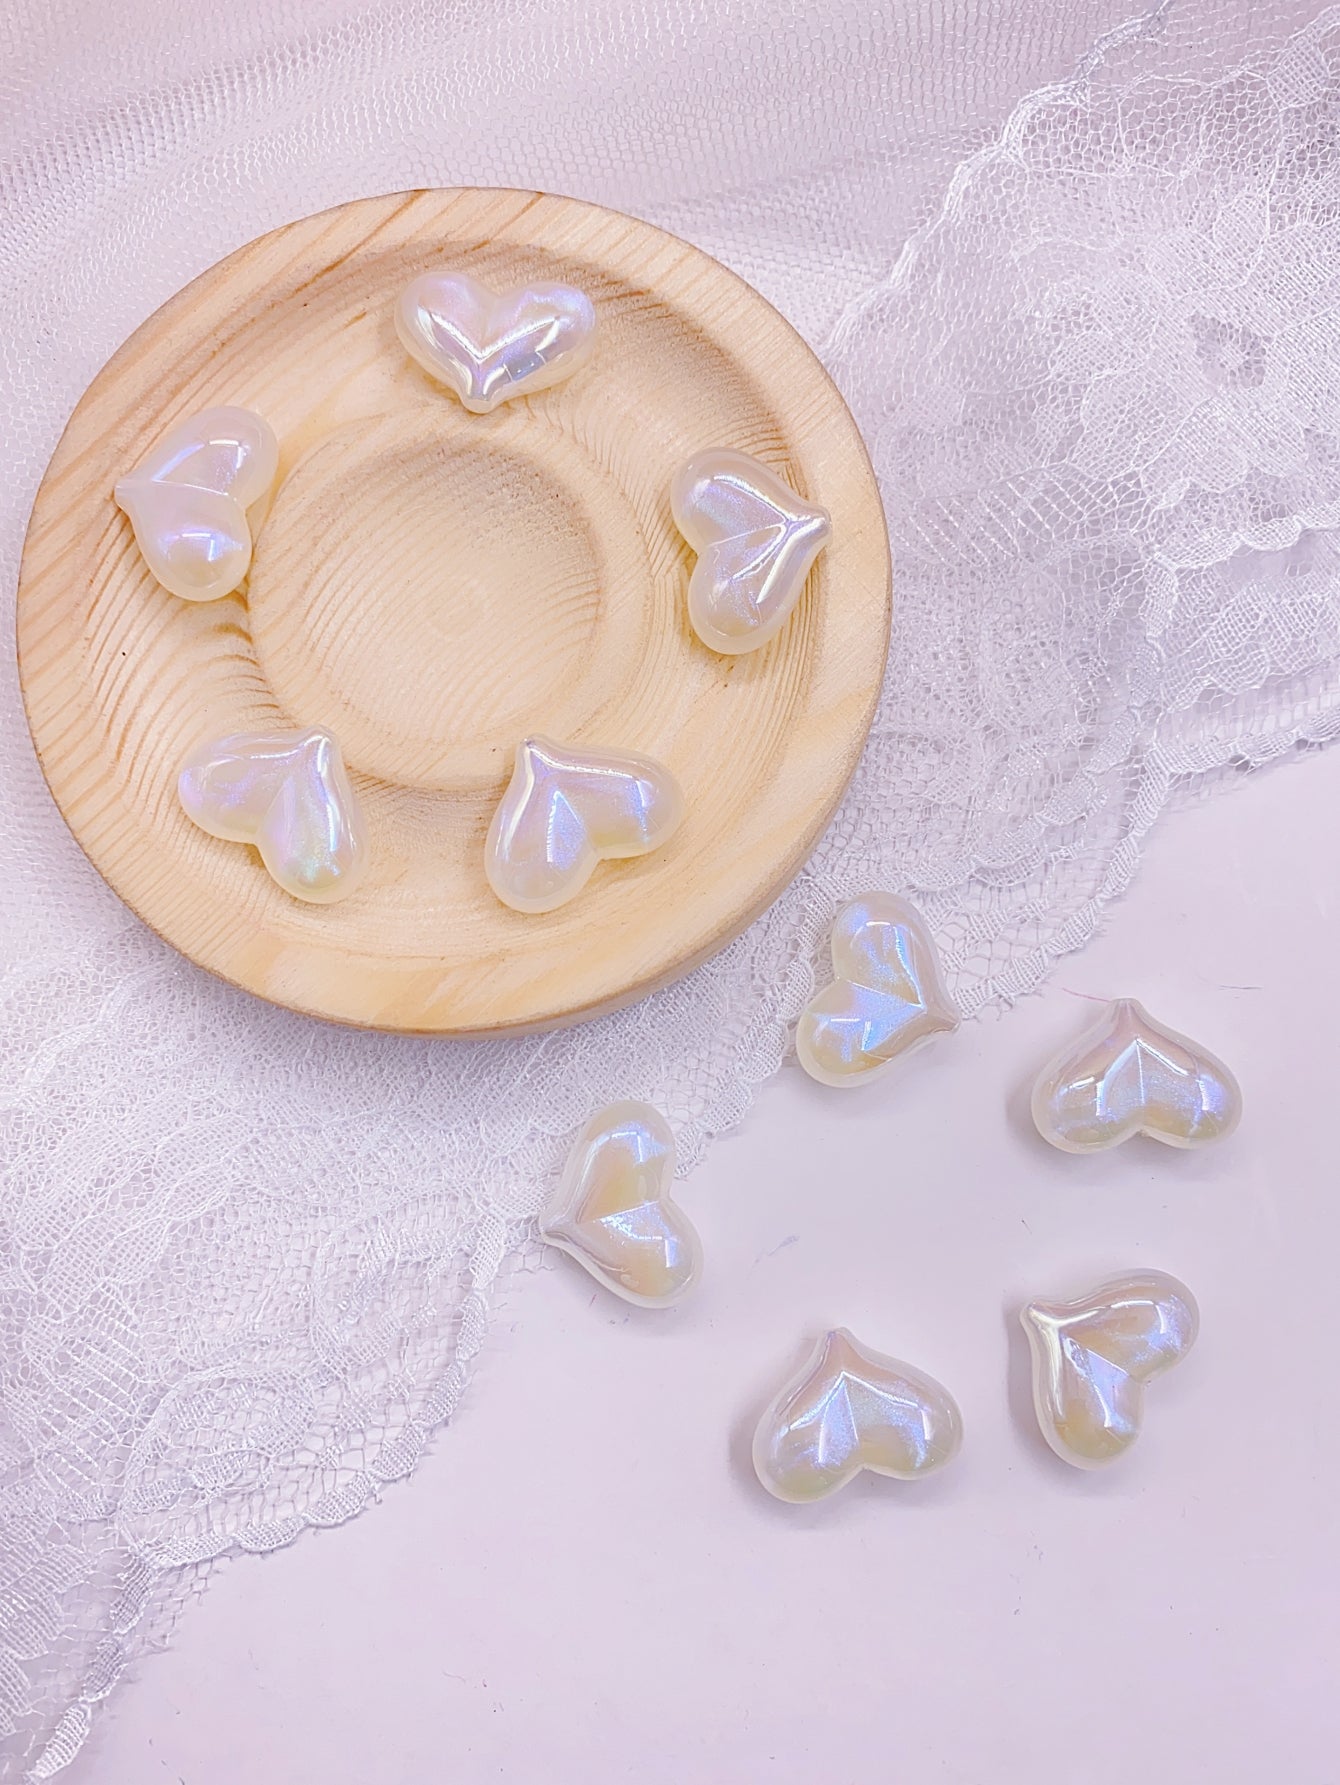 Merman heart straight hole loose beads handmade DIY beaded heart pendant bracelet necklace material accessories